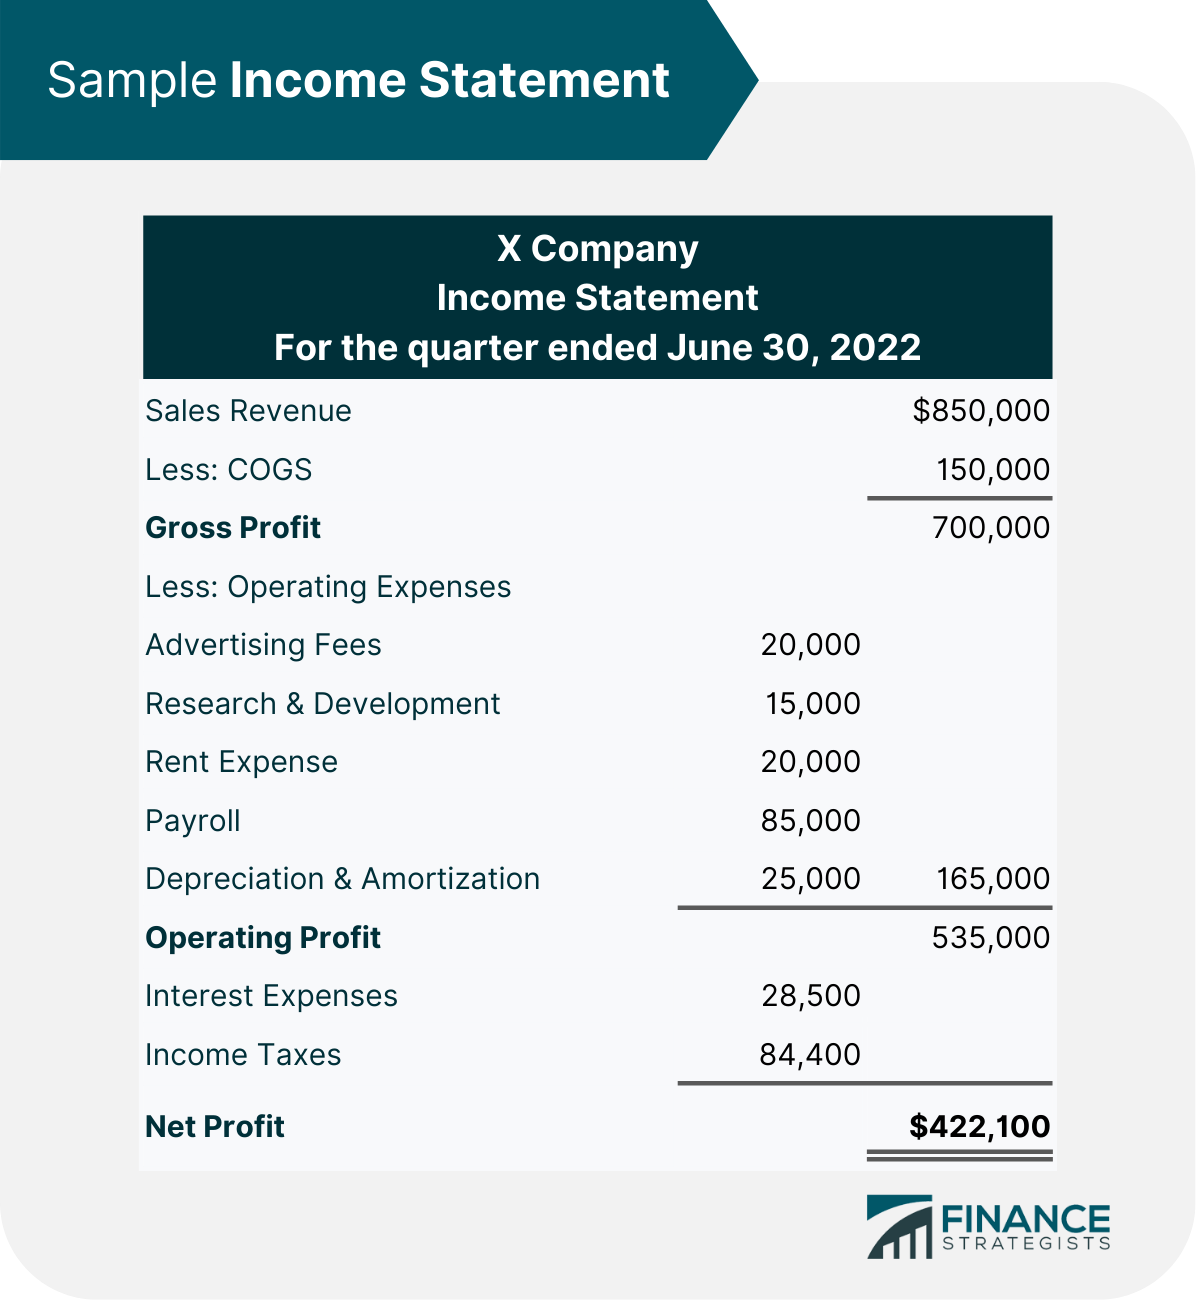 Sample_Income_Statement